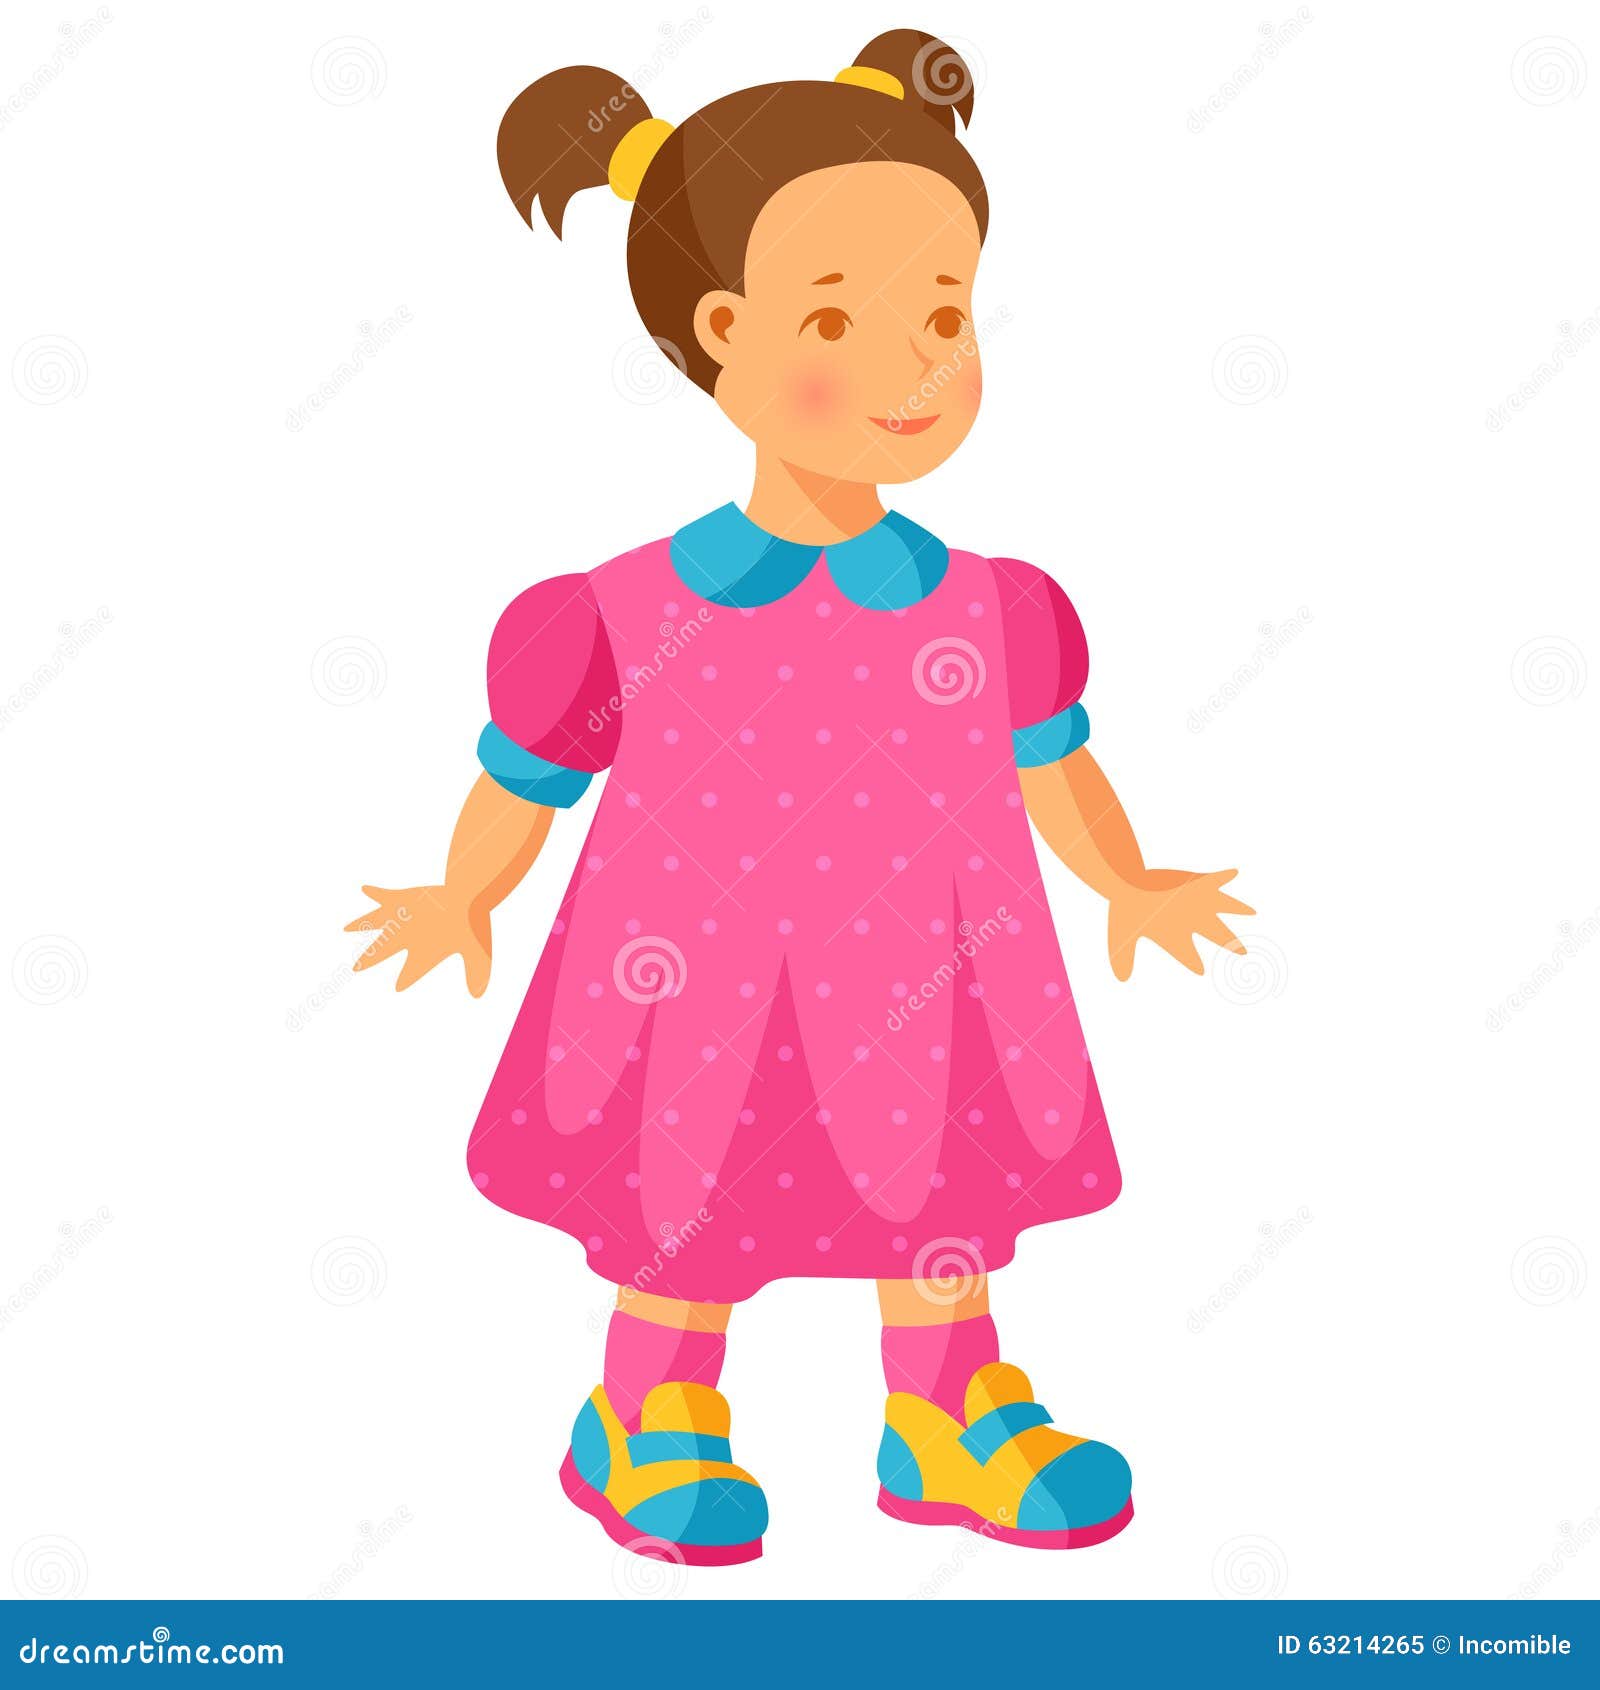 Illustration of Pretty Little Girl in Pink Dress Stock Vector ...